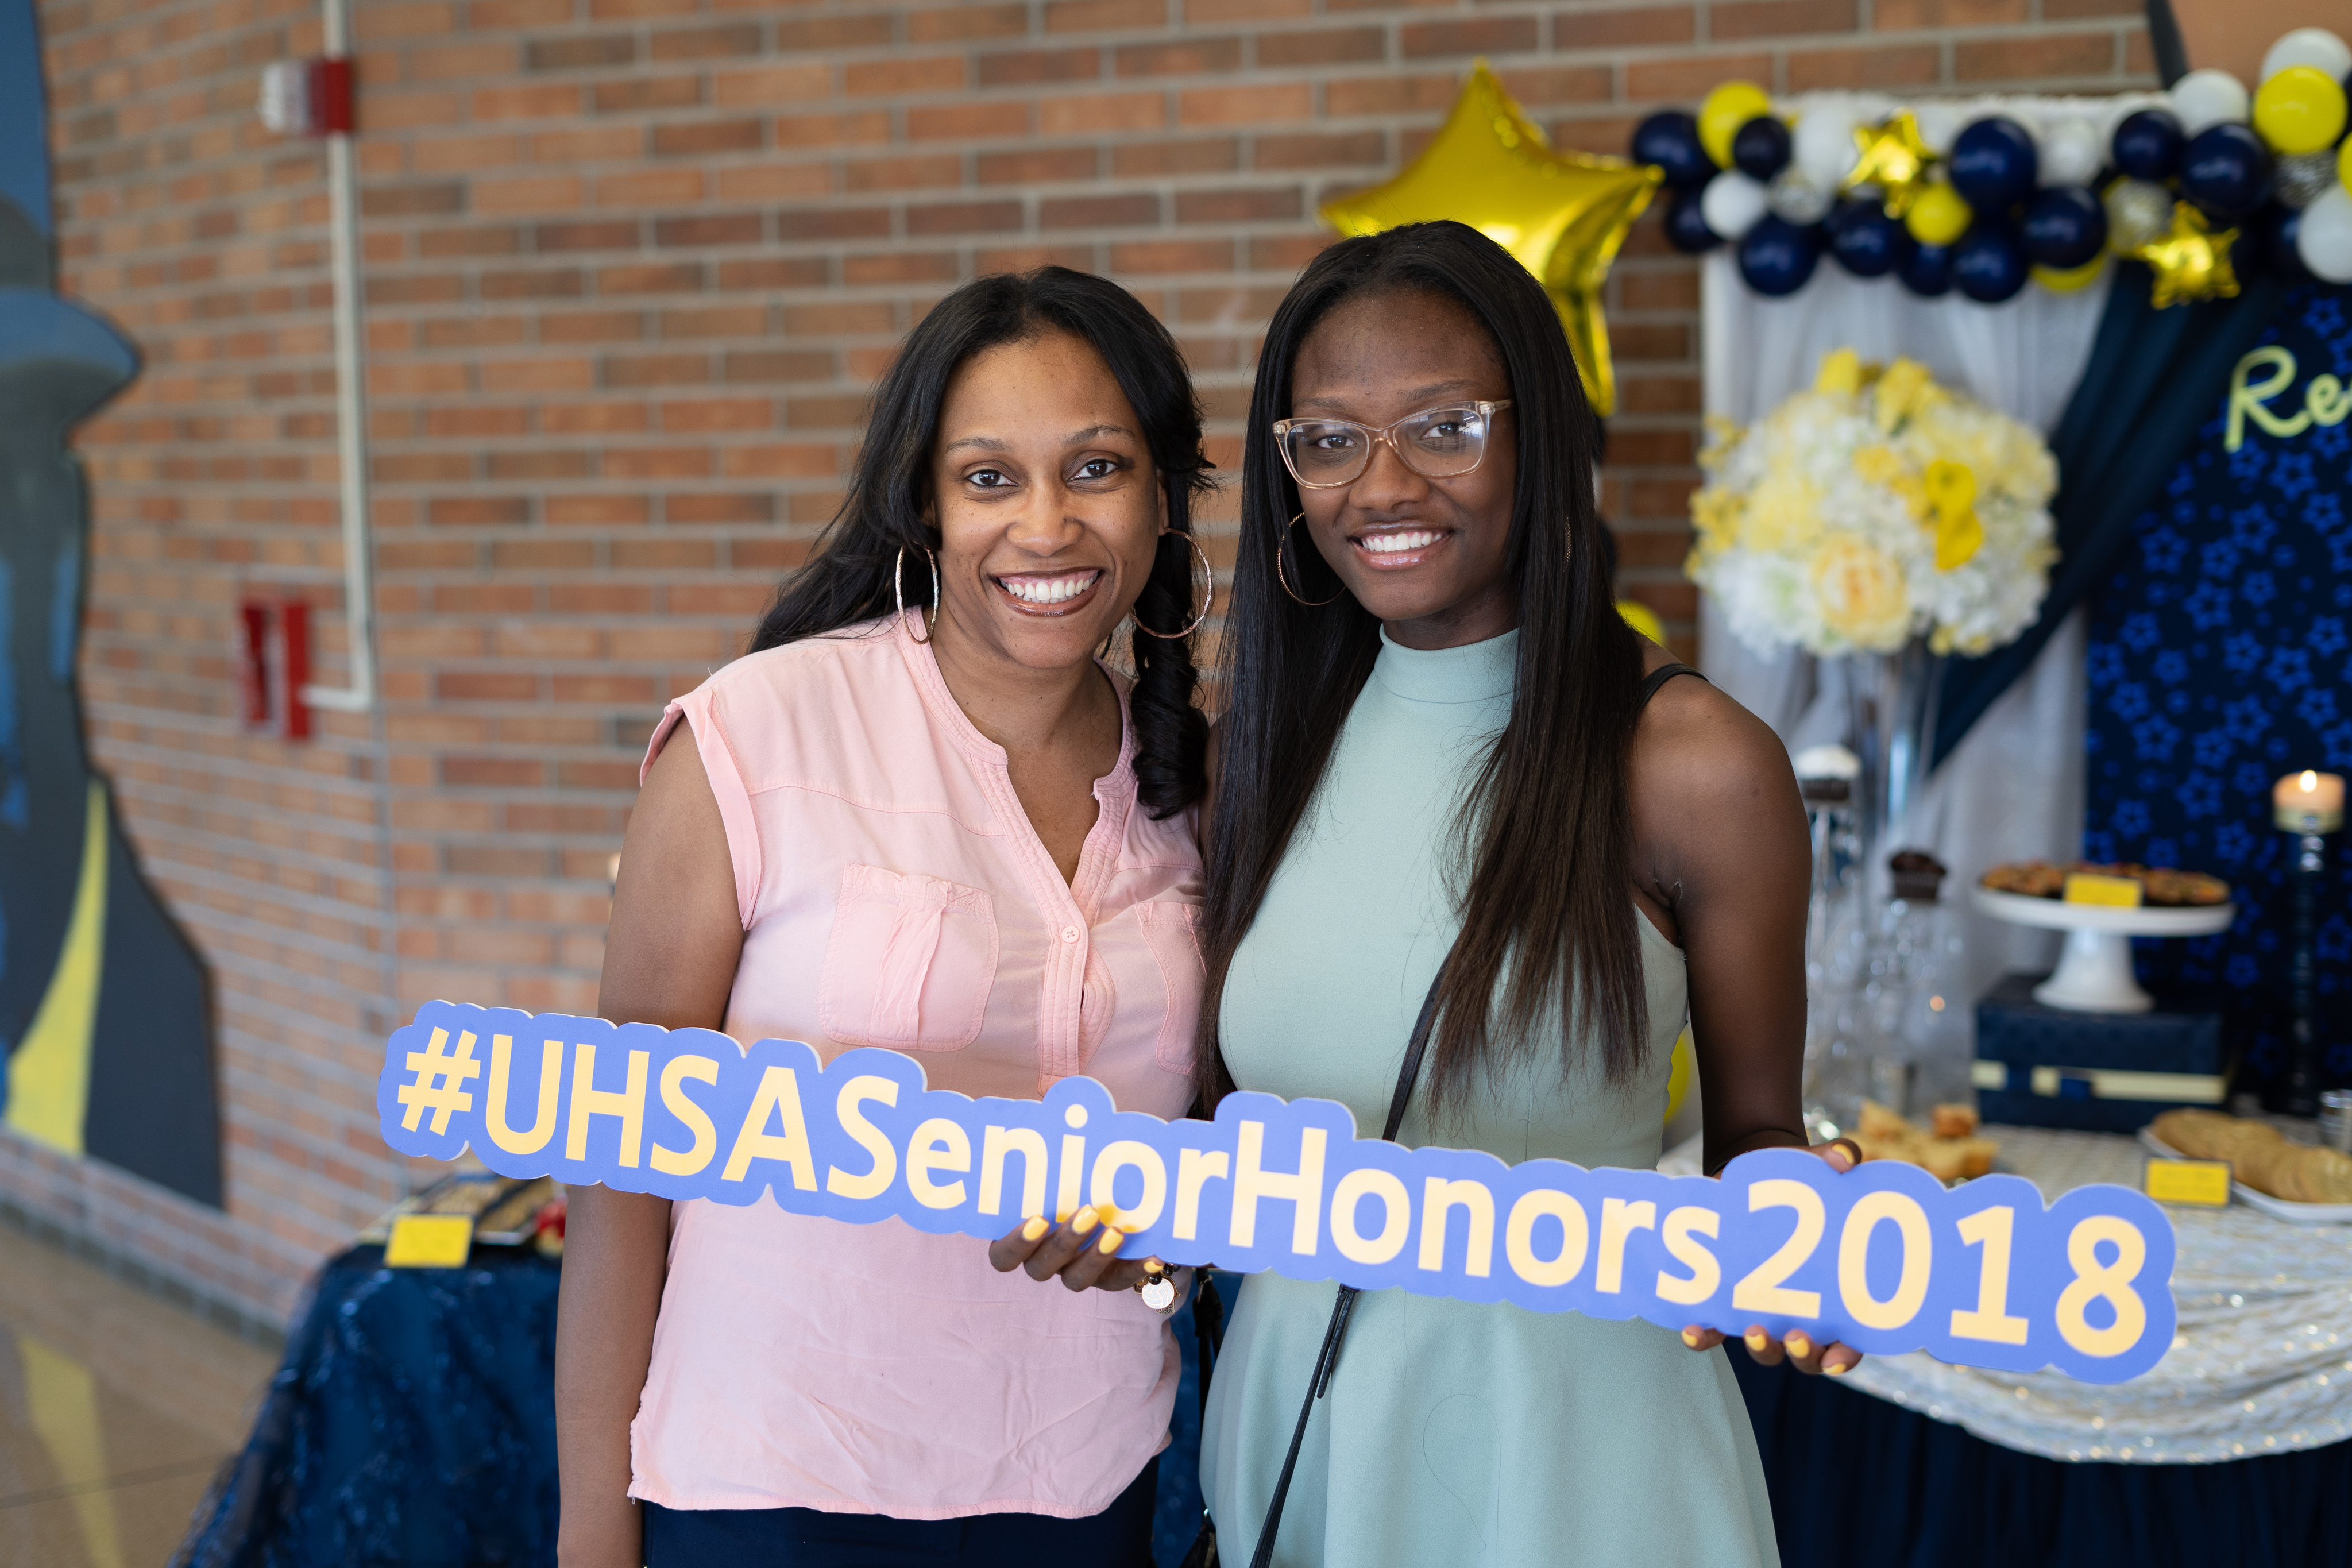 UHSA Senior Honors hashtag